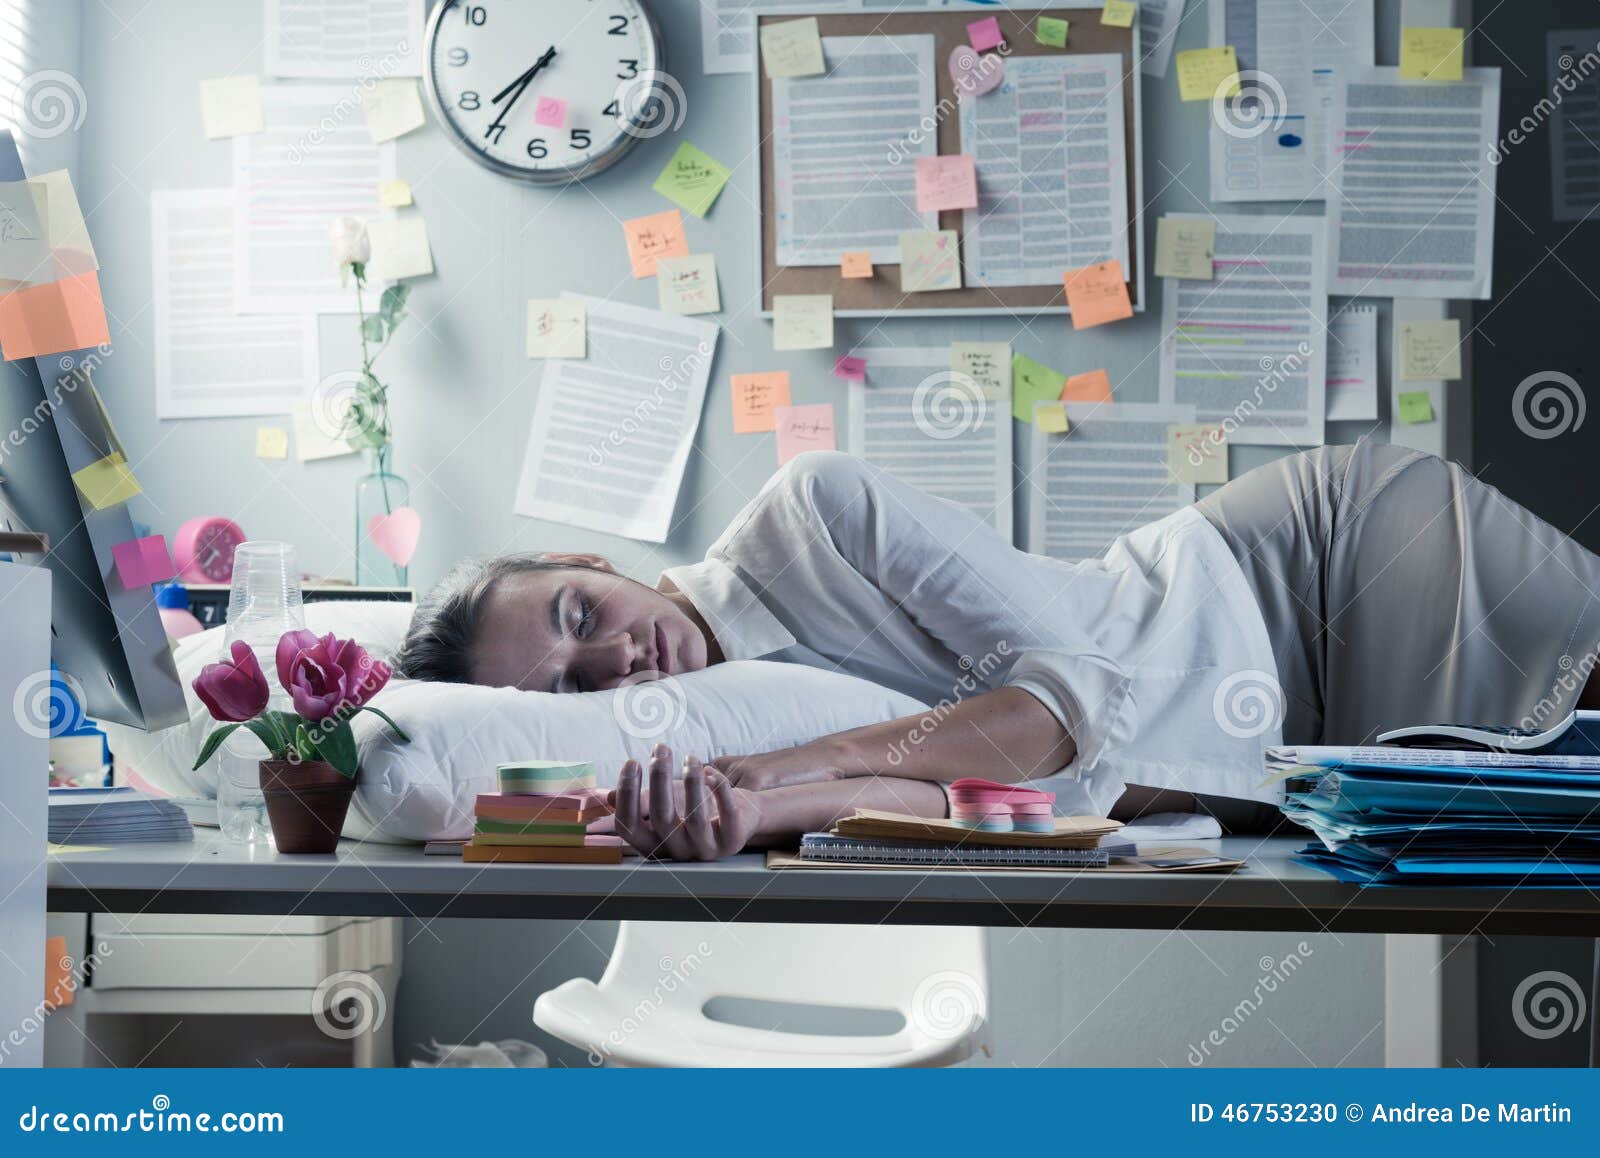 woman sleeping in office overnight